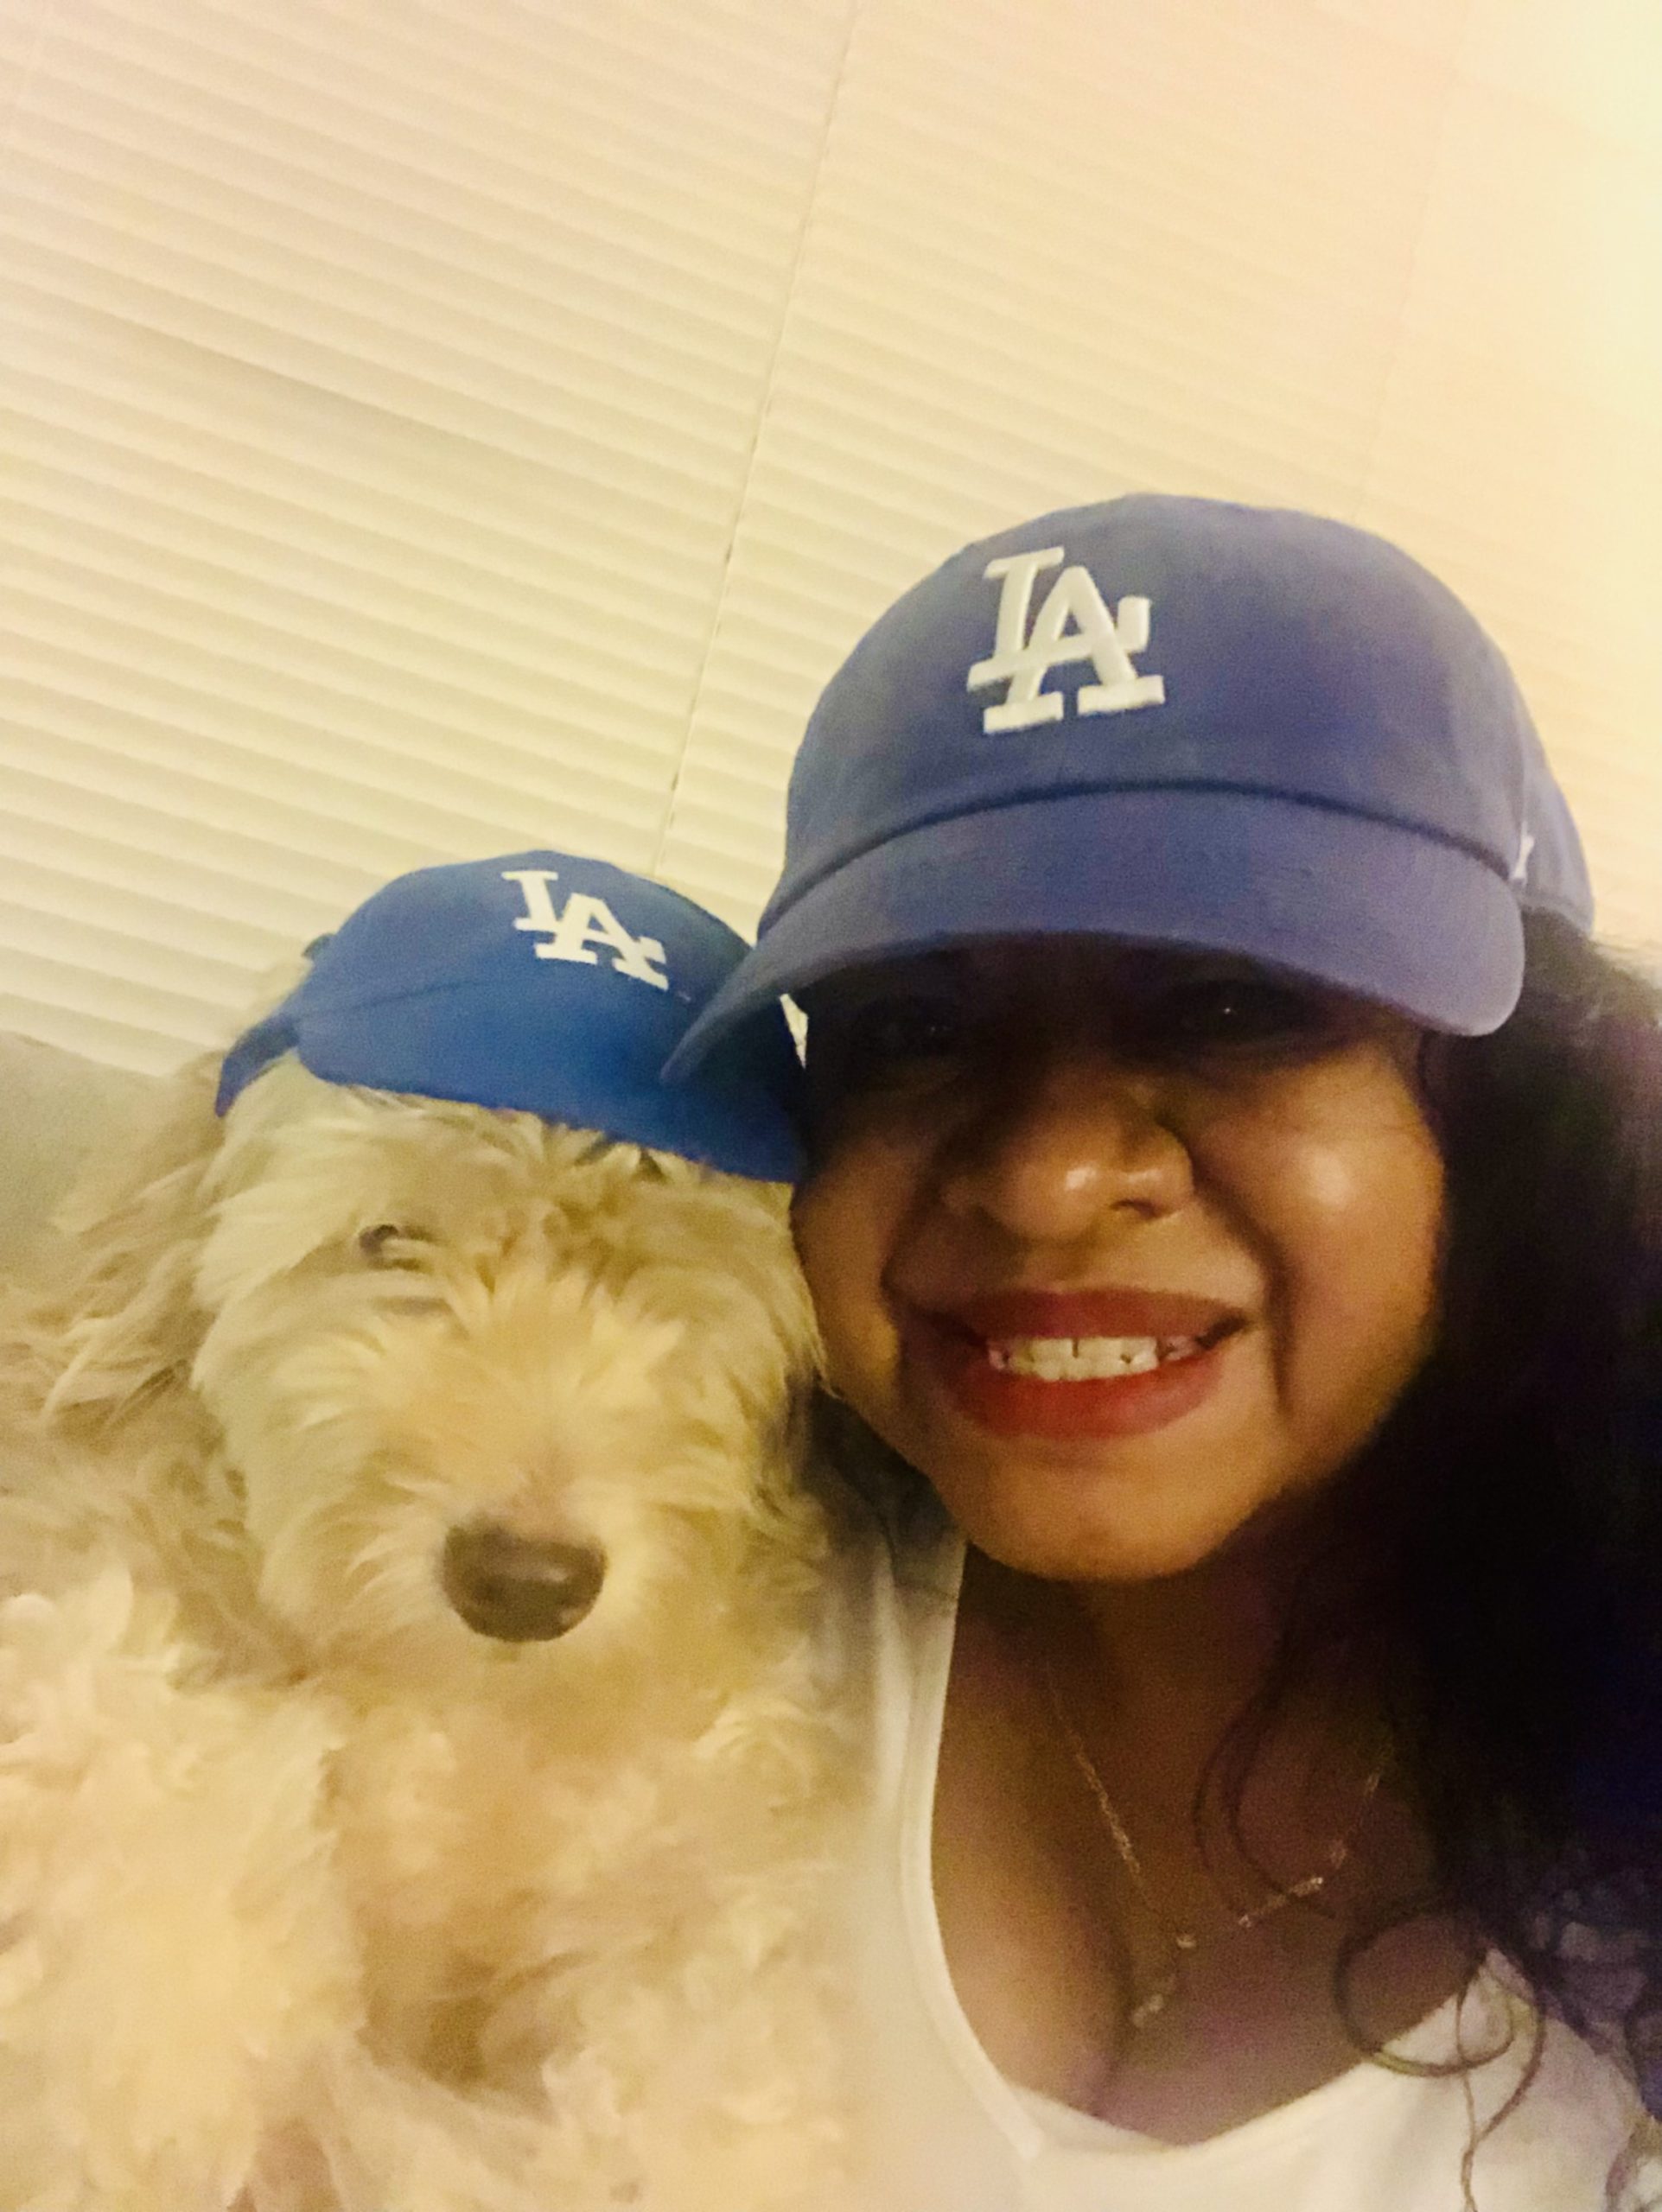 Marissa with her dog, Pancho, wearing Dodgers fan merch